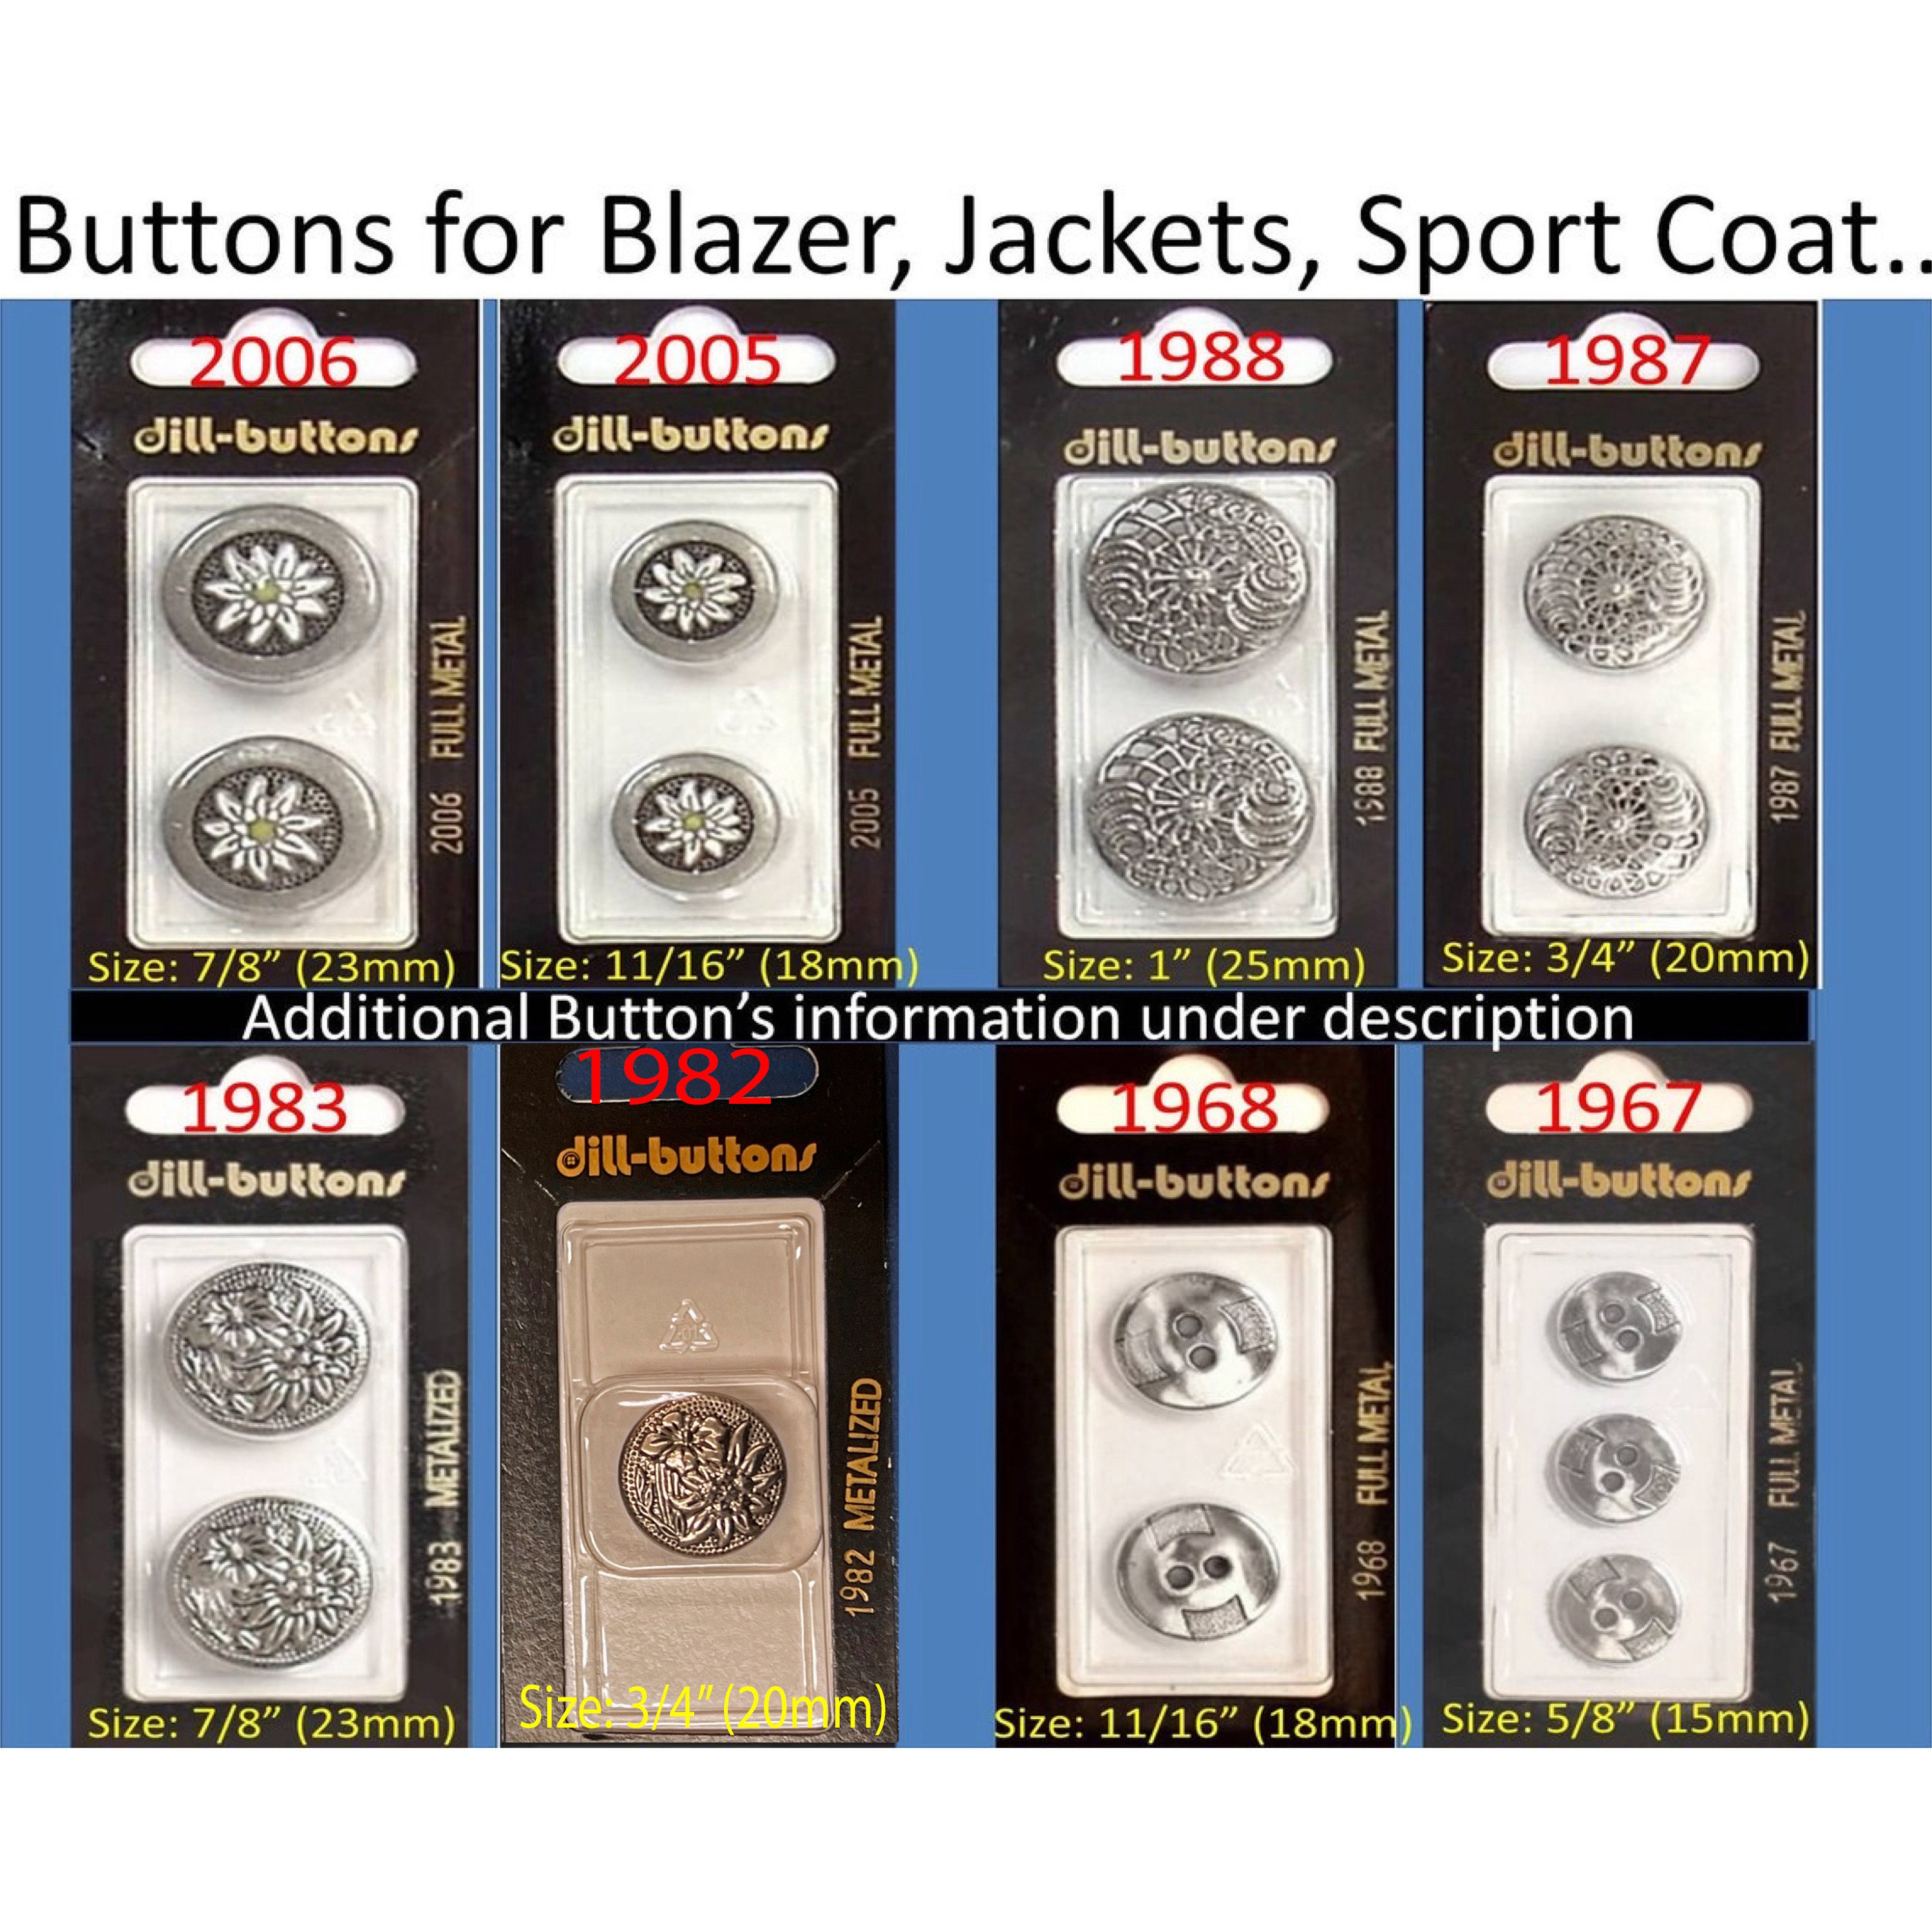 Metal Blazer Buttons for Suit Jackets, Blazer, or Sport Coat. 11